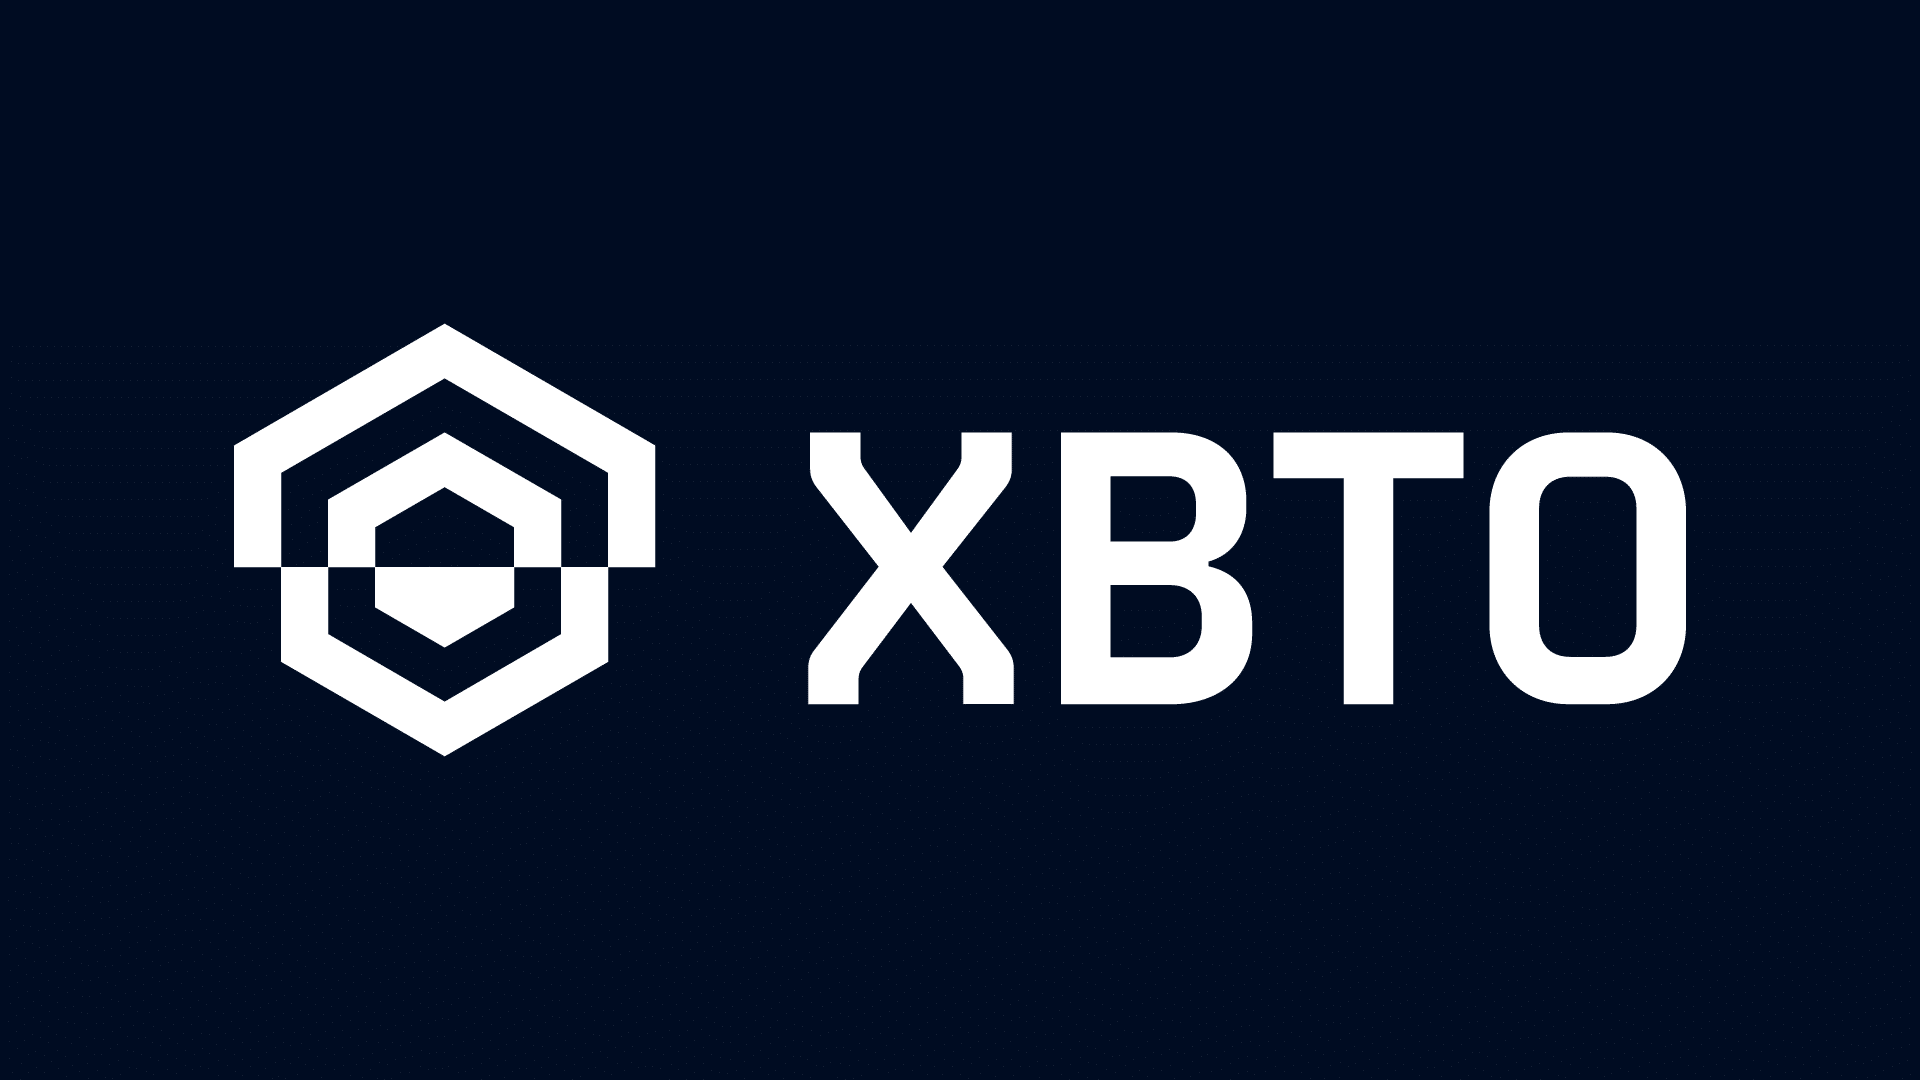 XBTO Logo - KX